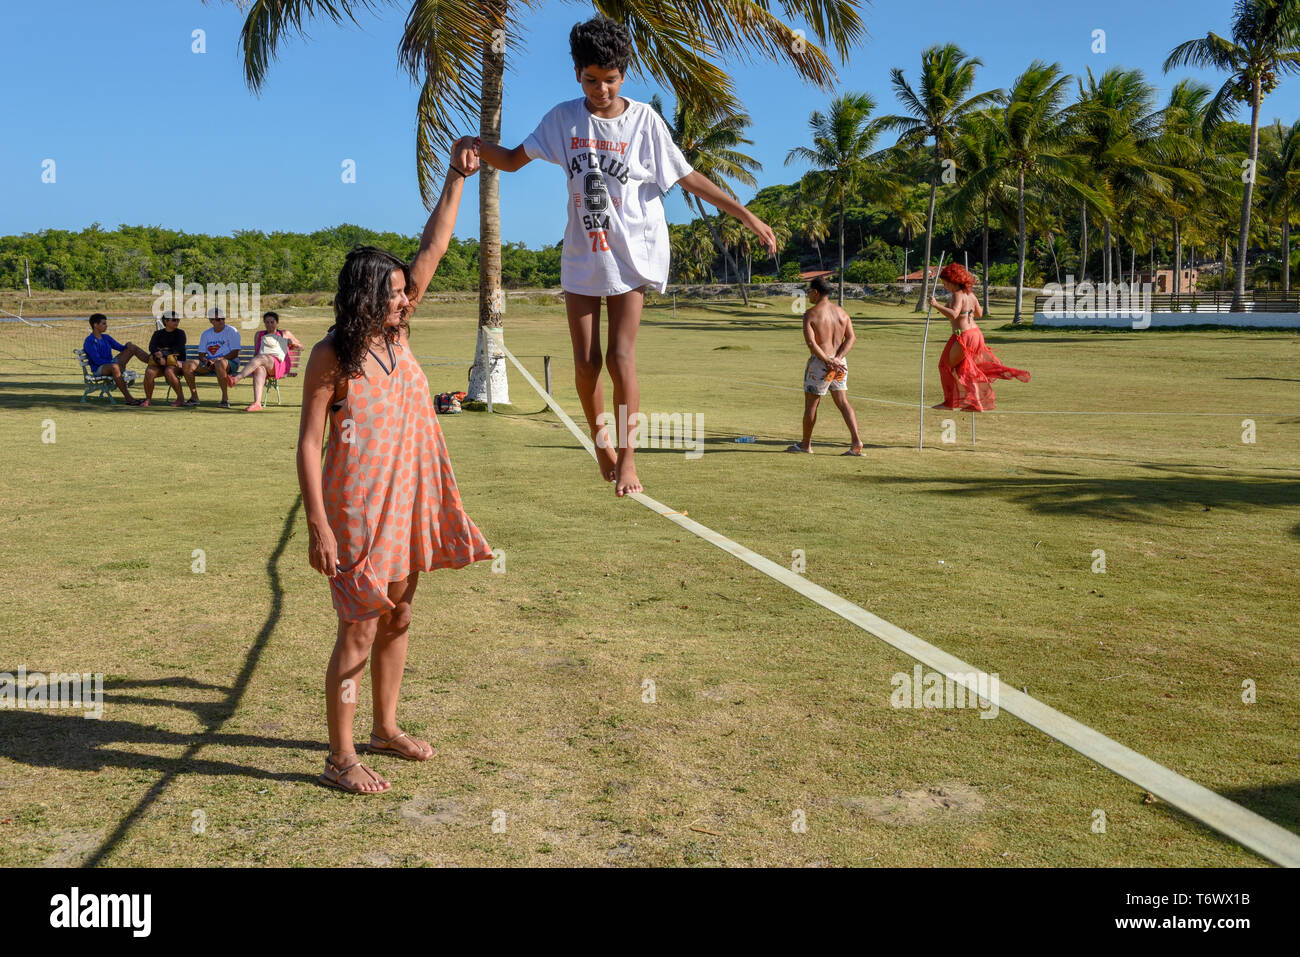 Pipa, Brazil - 23 January 2019: Woman on tightrope walker training near Pipa on Brazil Stock Photo